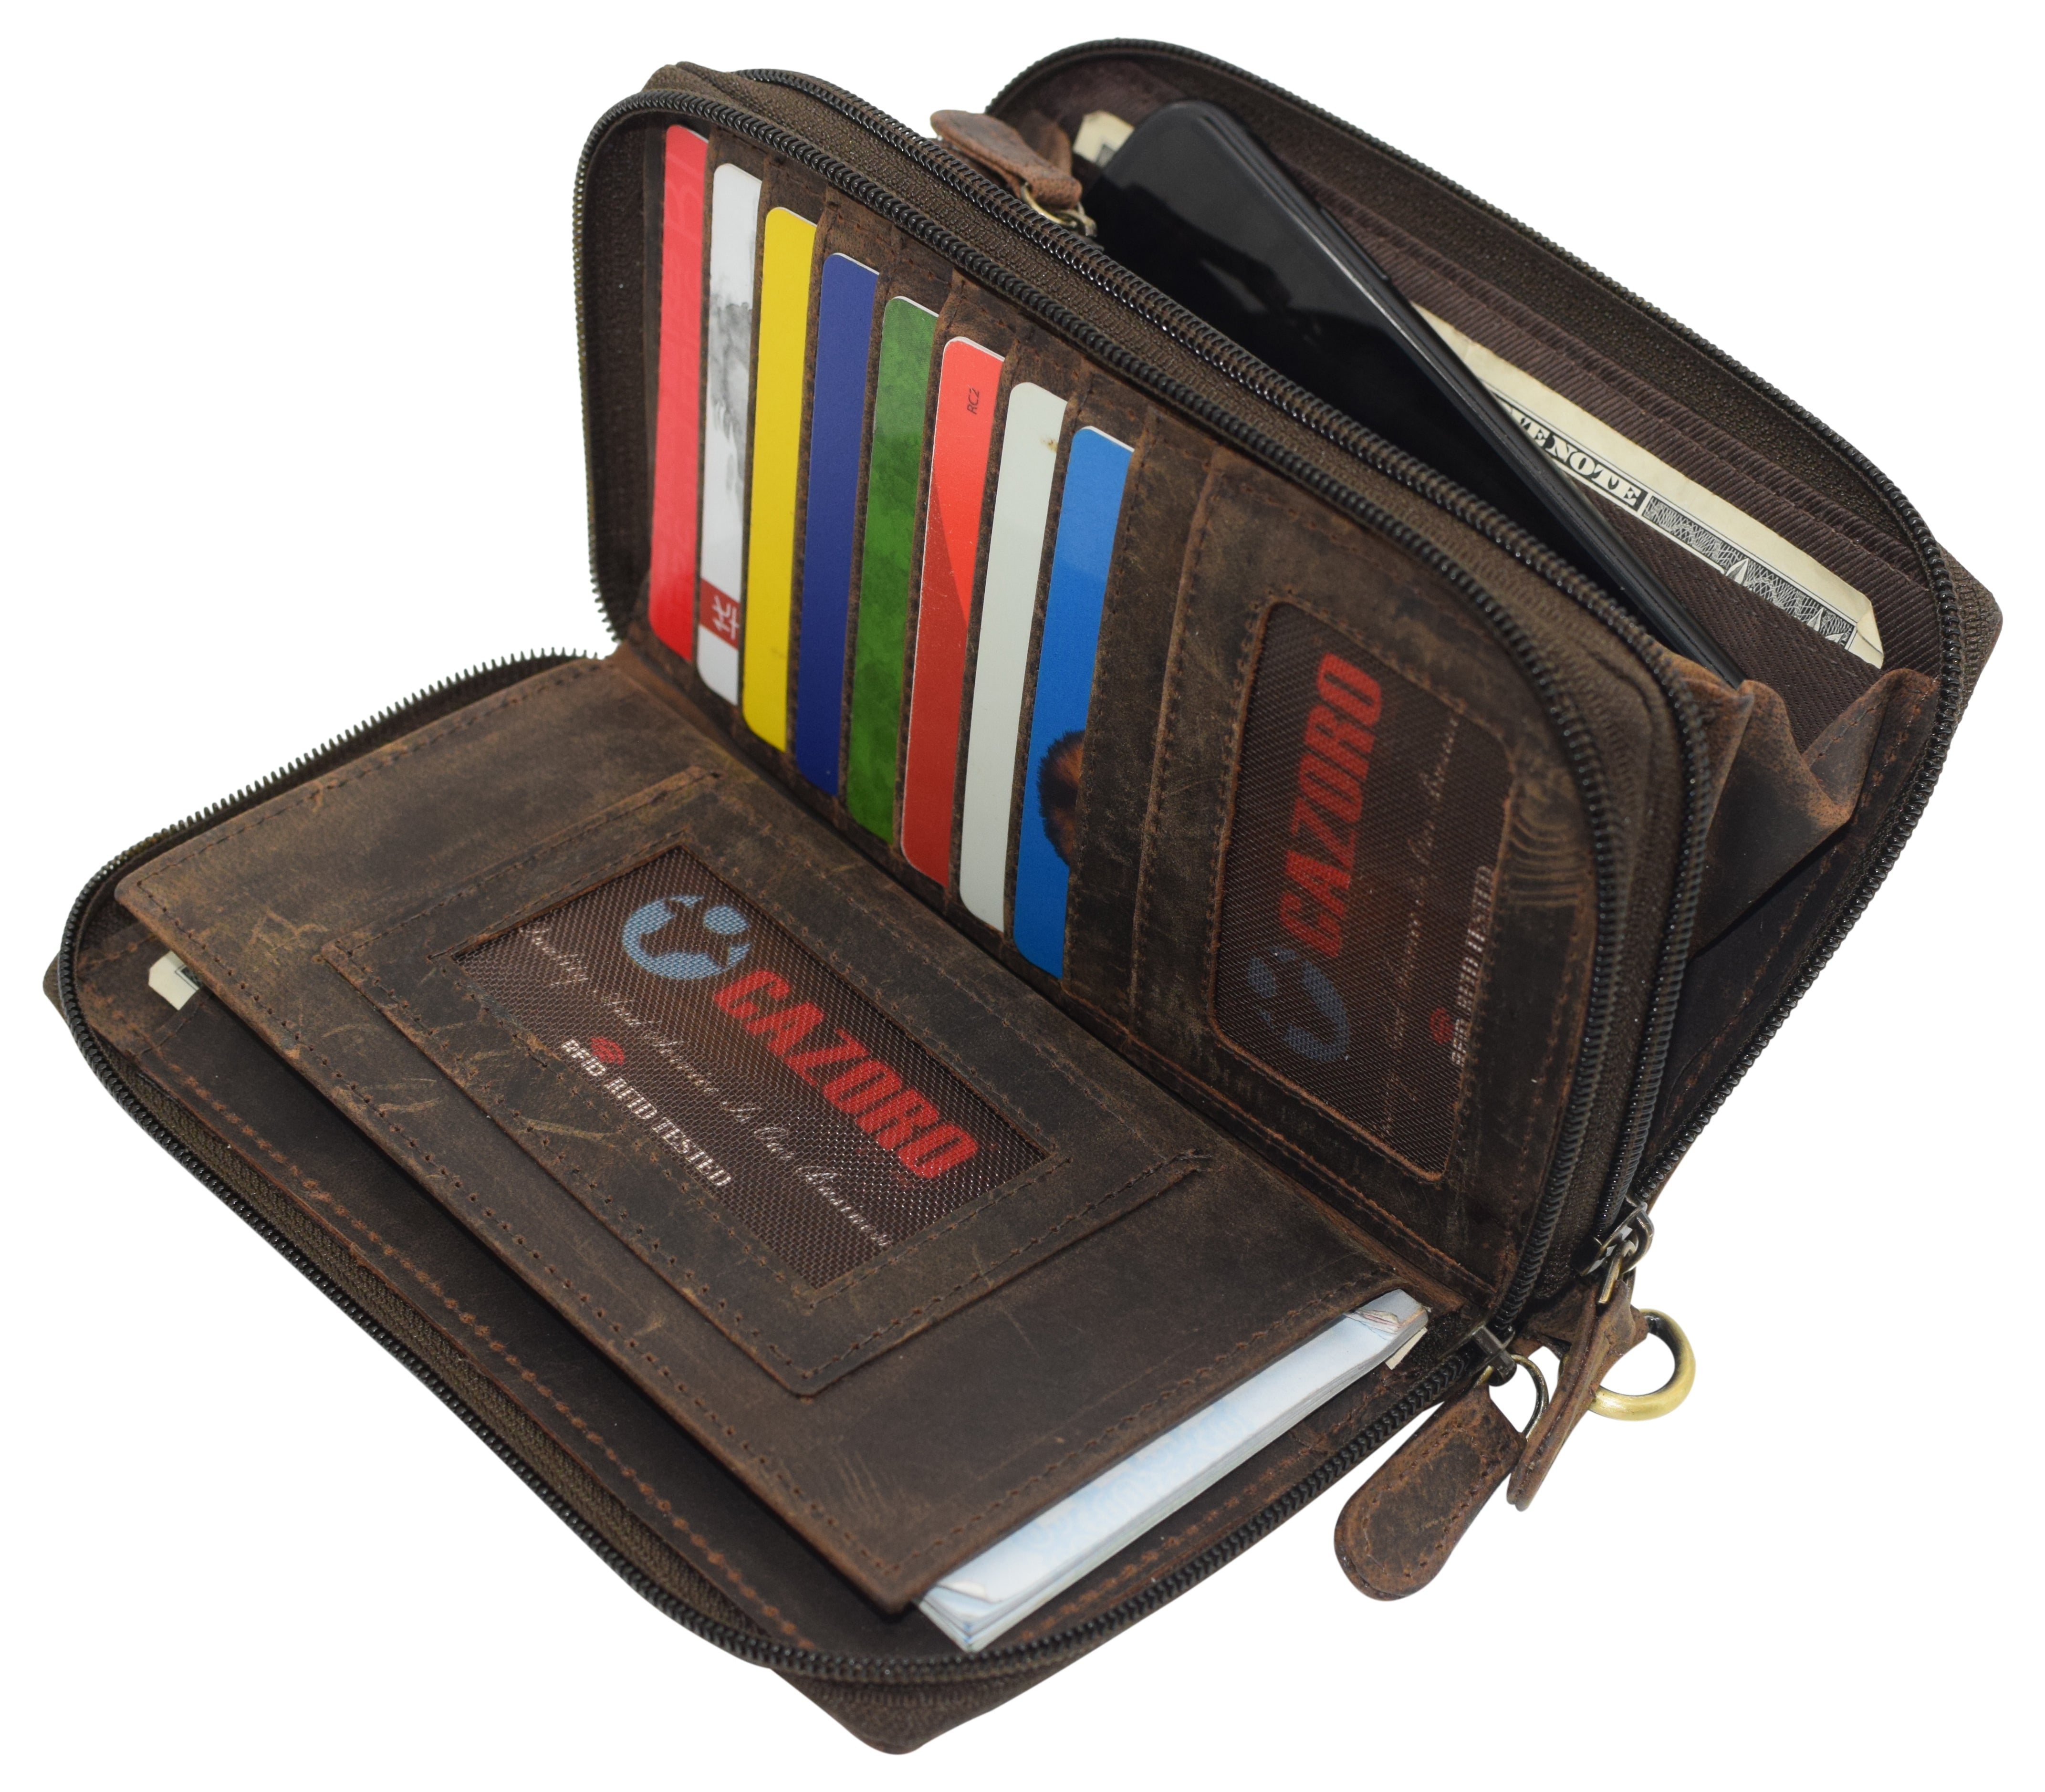 Men wallets with coin pocket long zipper business Male Wallet Double zipper  Vintage Large Wallet Purse